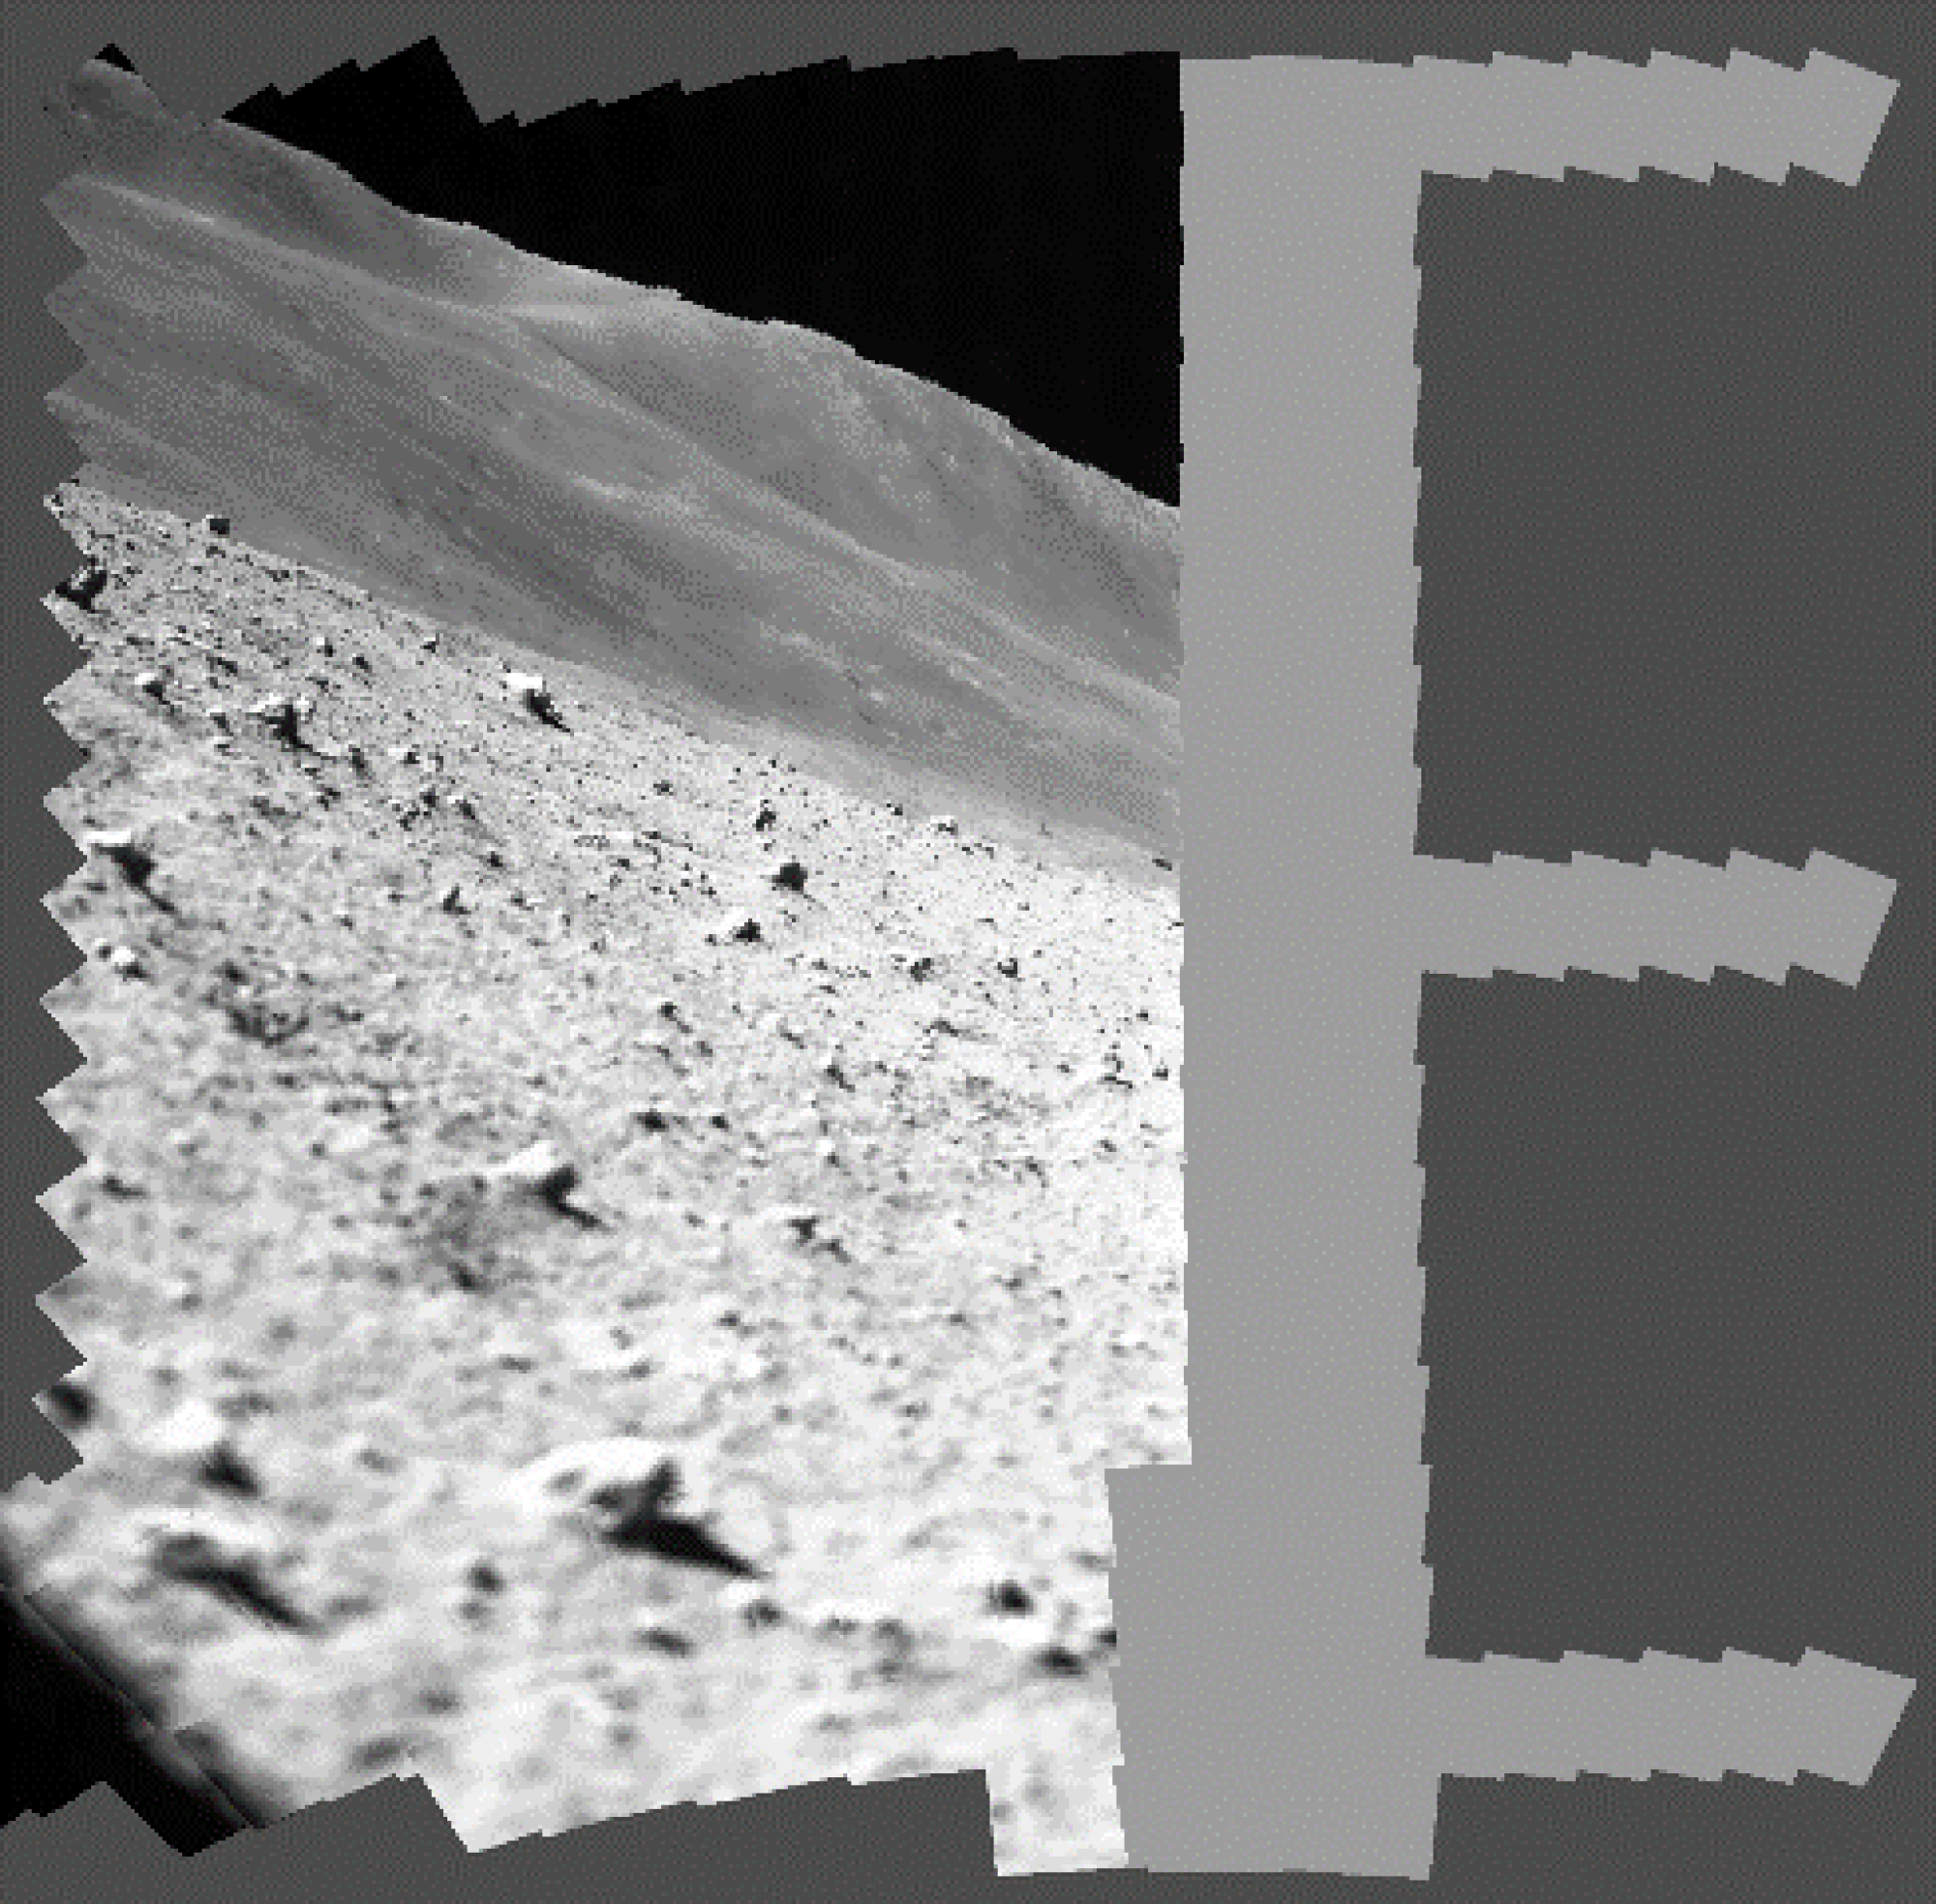 SLIM imaging the lunar surface